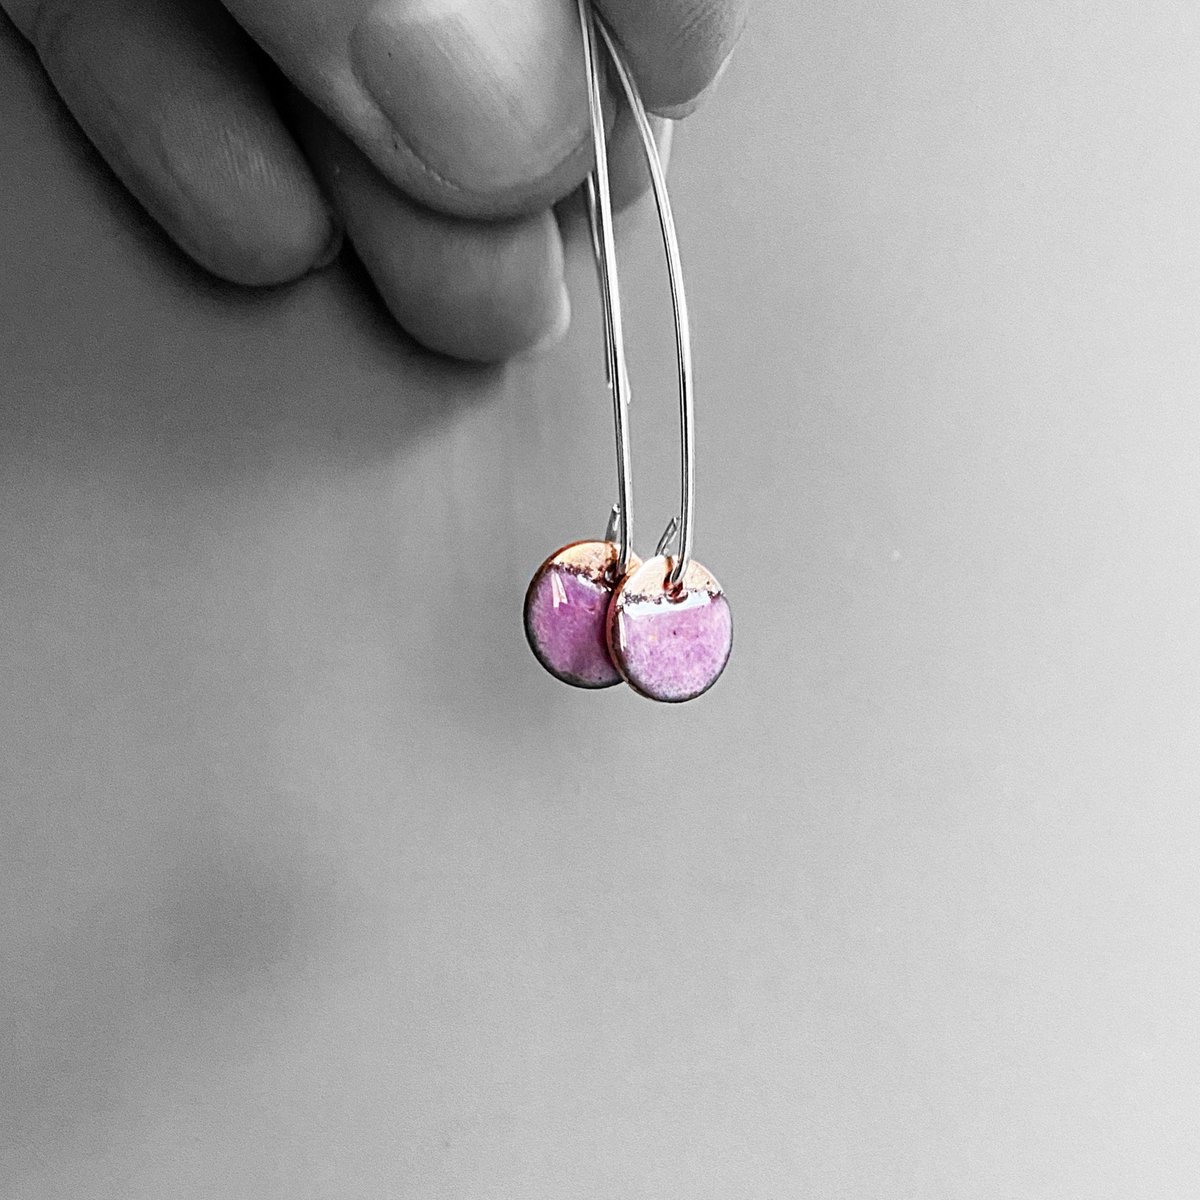 Raspberry Pink Enamel Disc Earrings , Cute Geometric Drop Earrings tuppu.net/5fd54cb3 #bizbubble #HandmadeHour ##UKGiftHour #MHHSBD #inbizhour #UKHashtags #shopsmall #giftideas #DangleEarrings